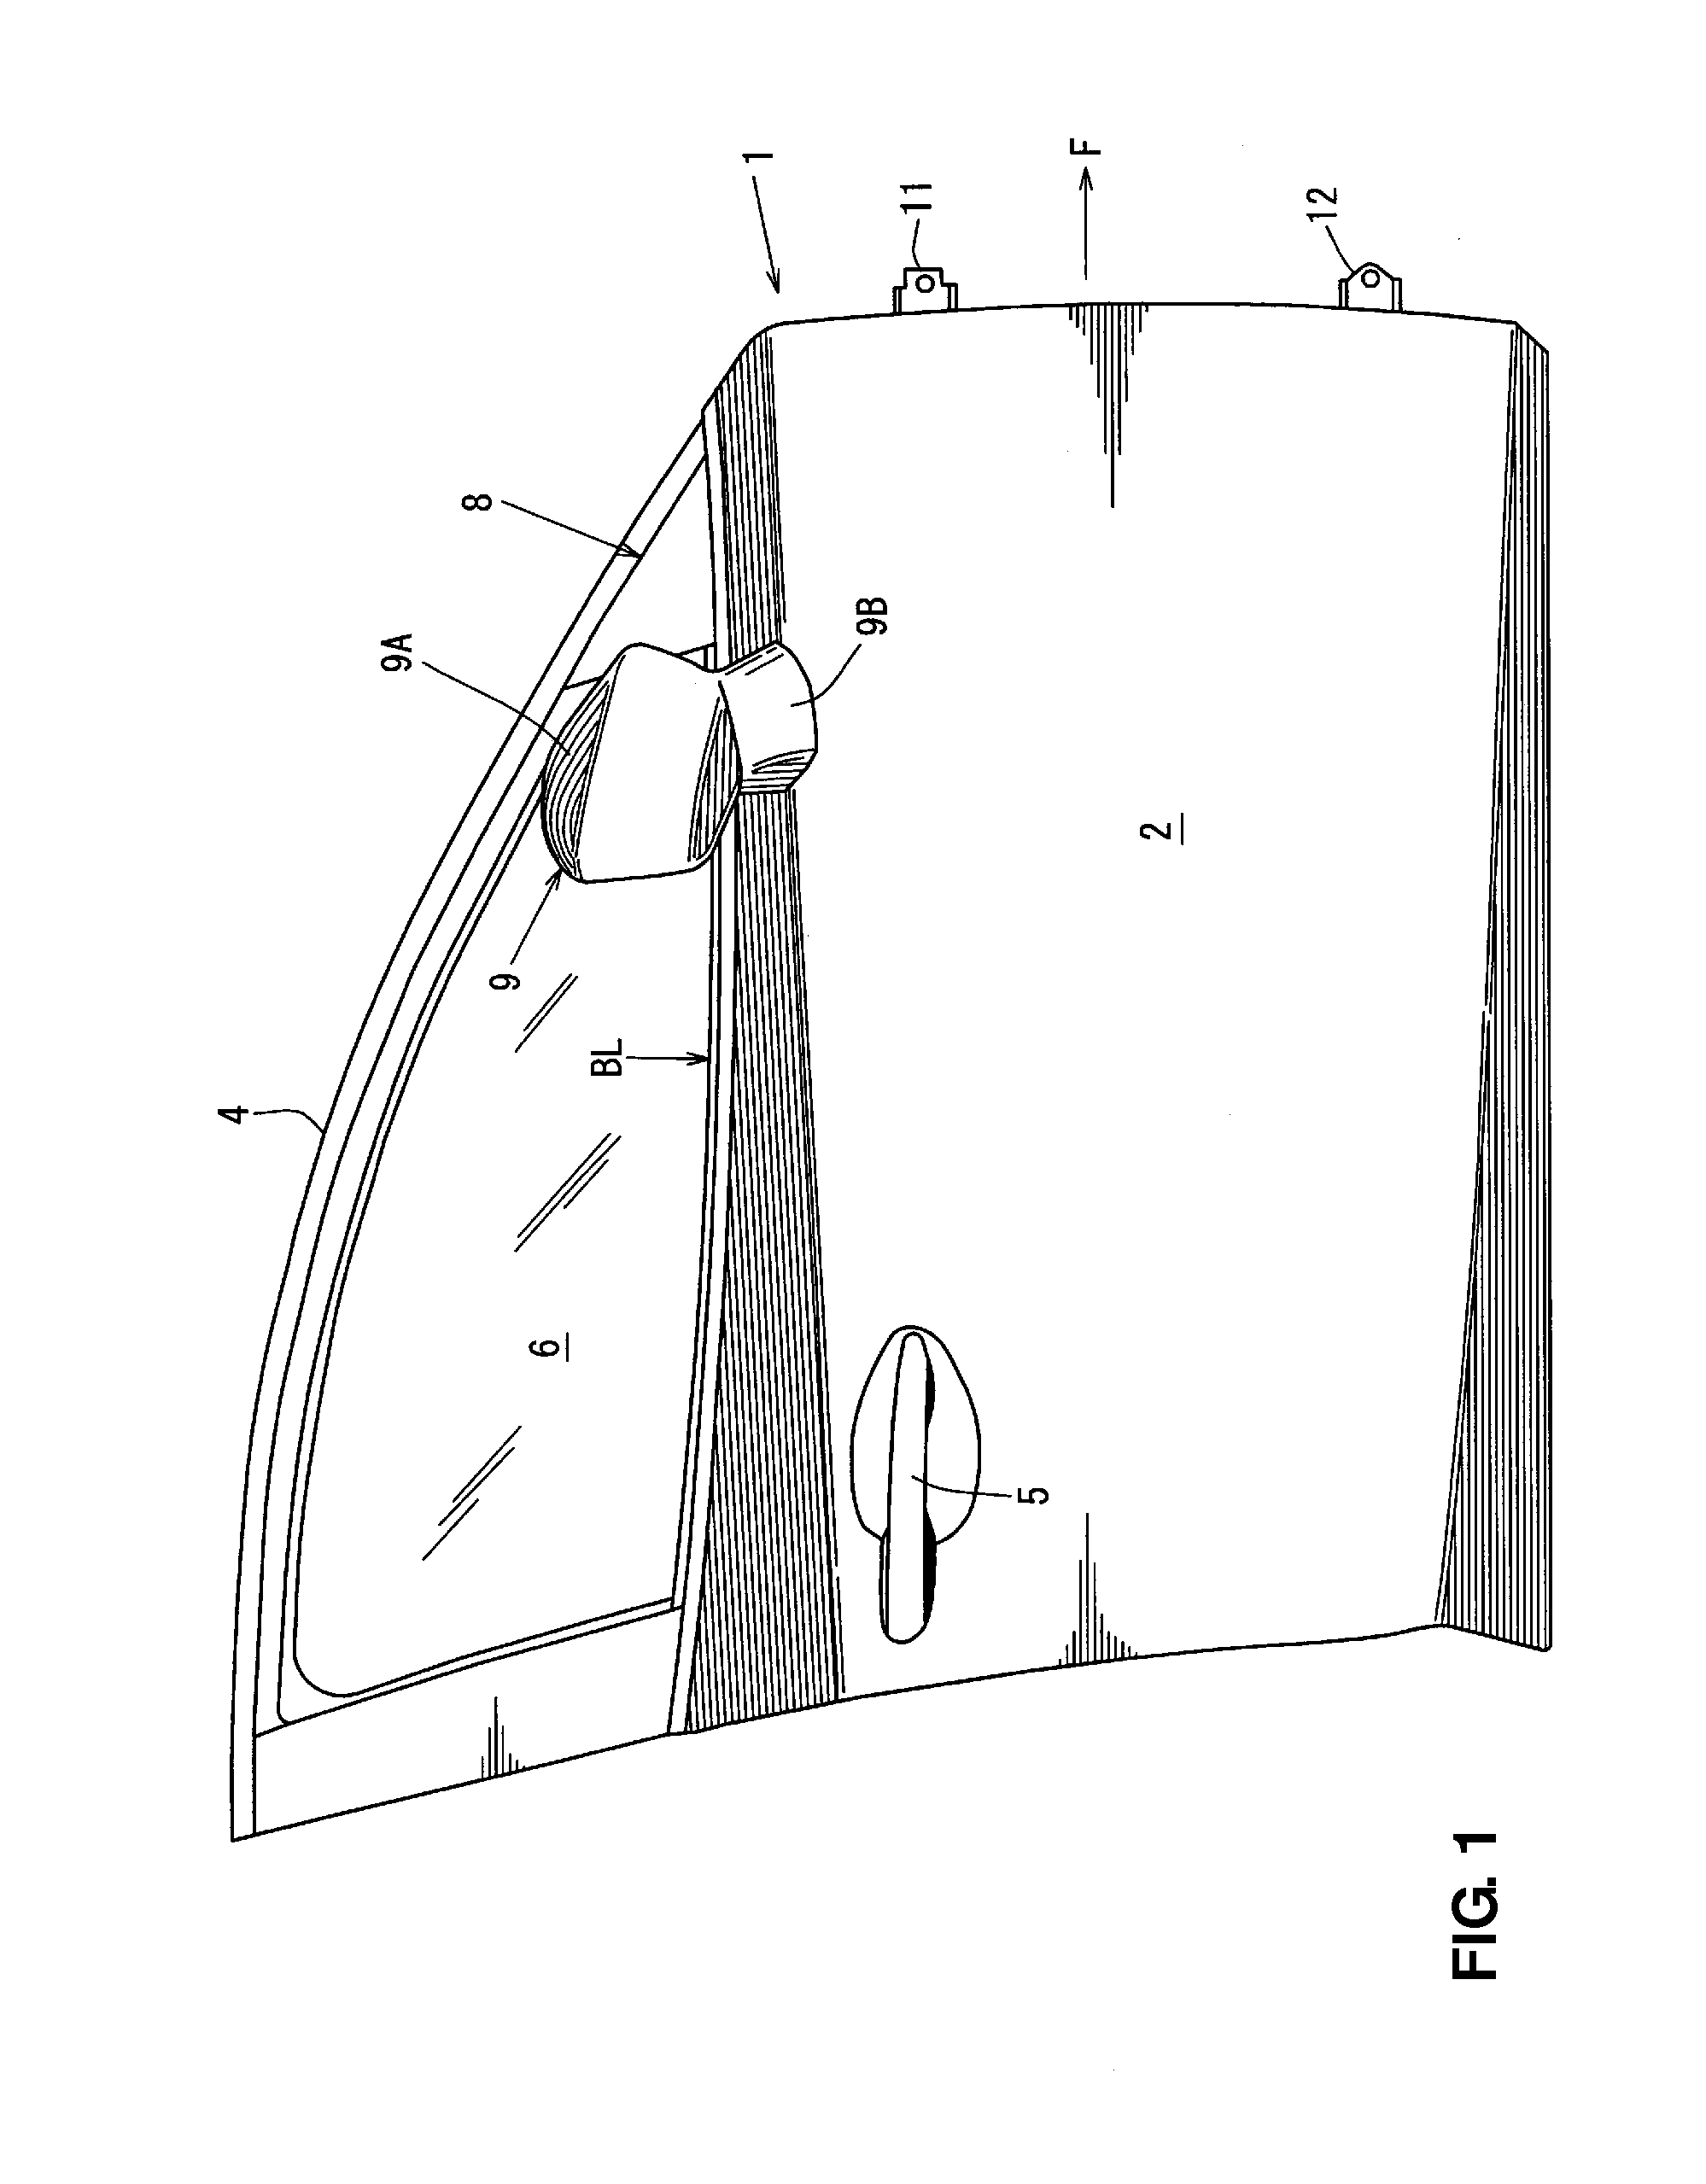 Attachment structure of door mirror